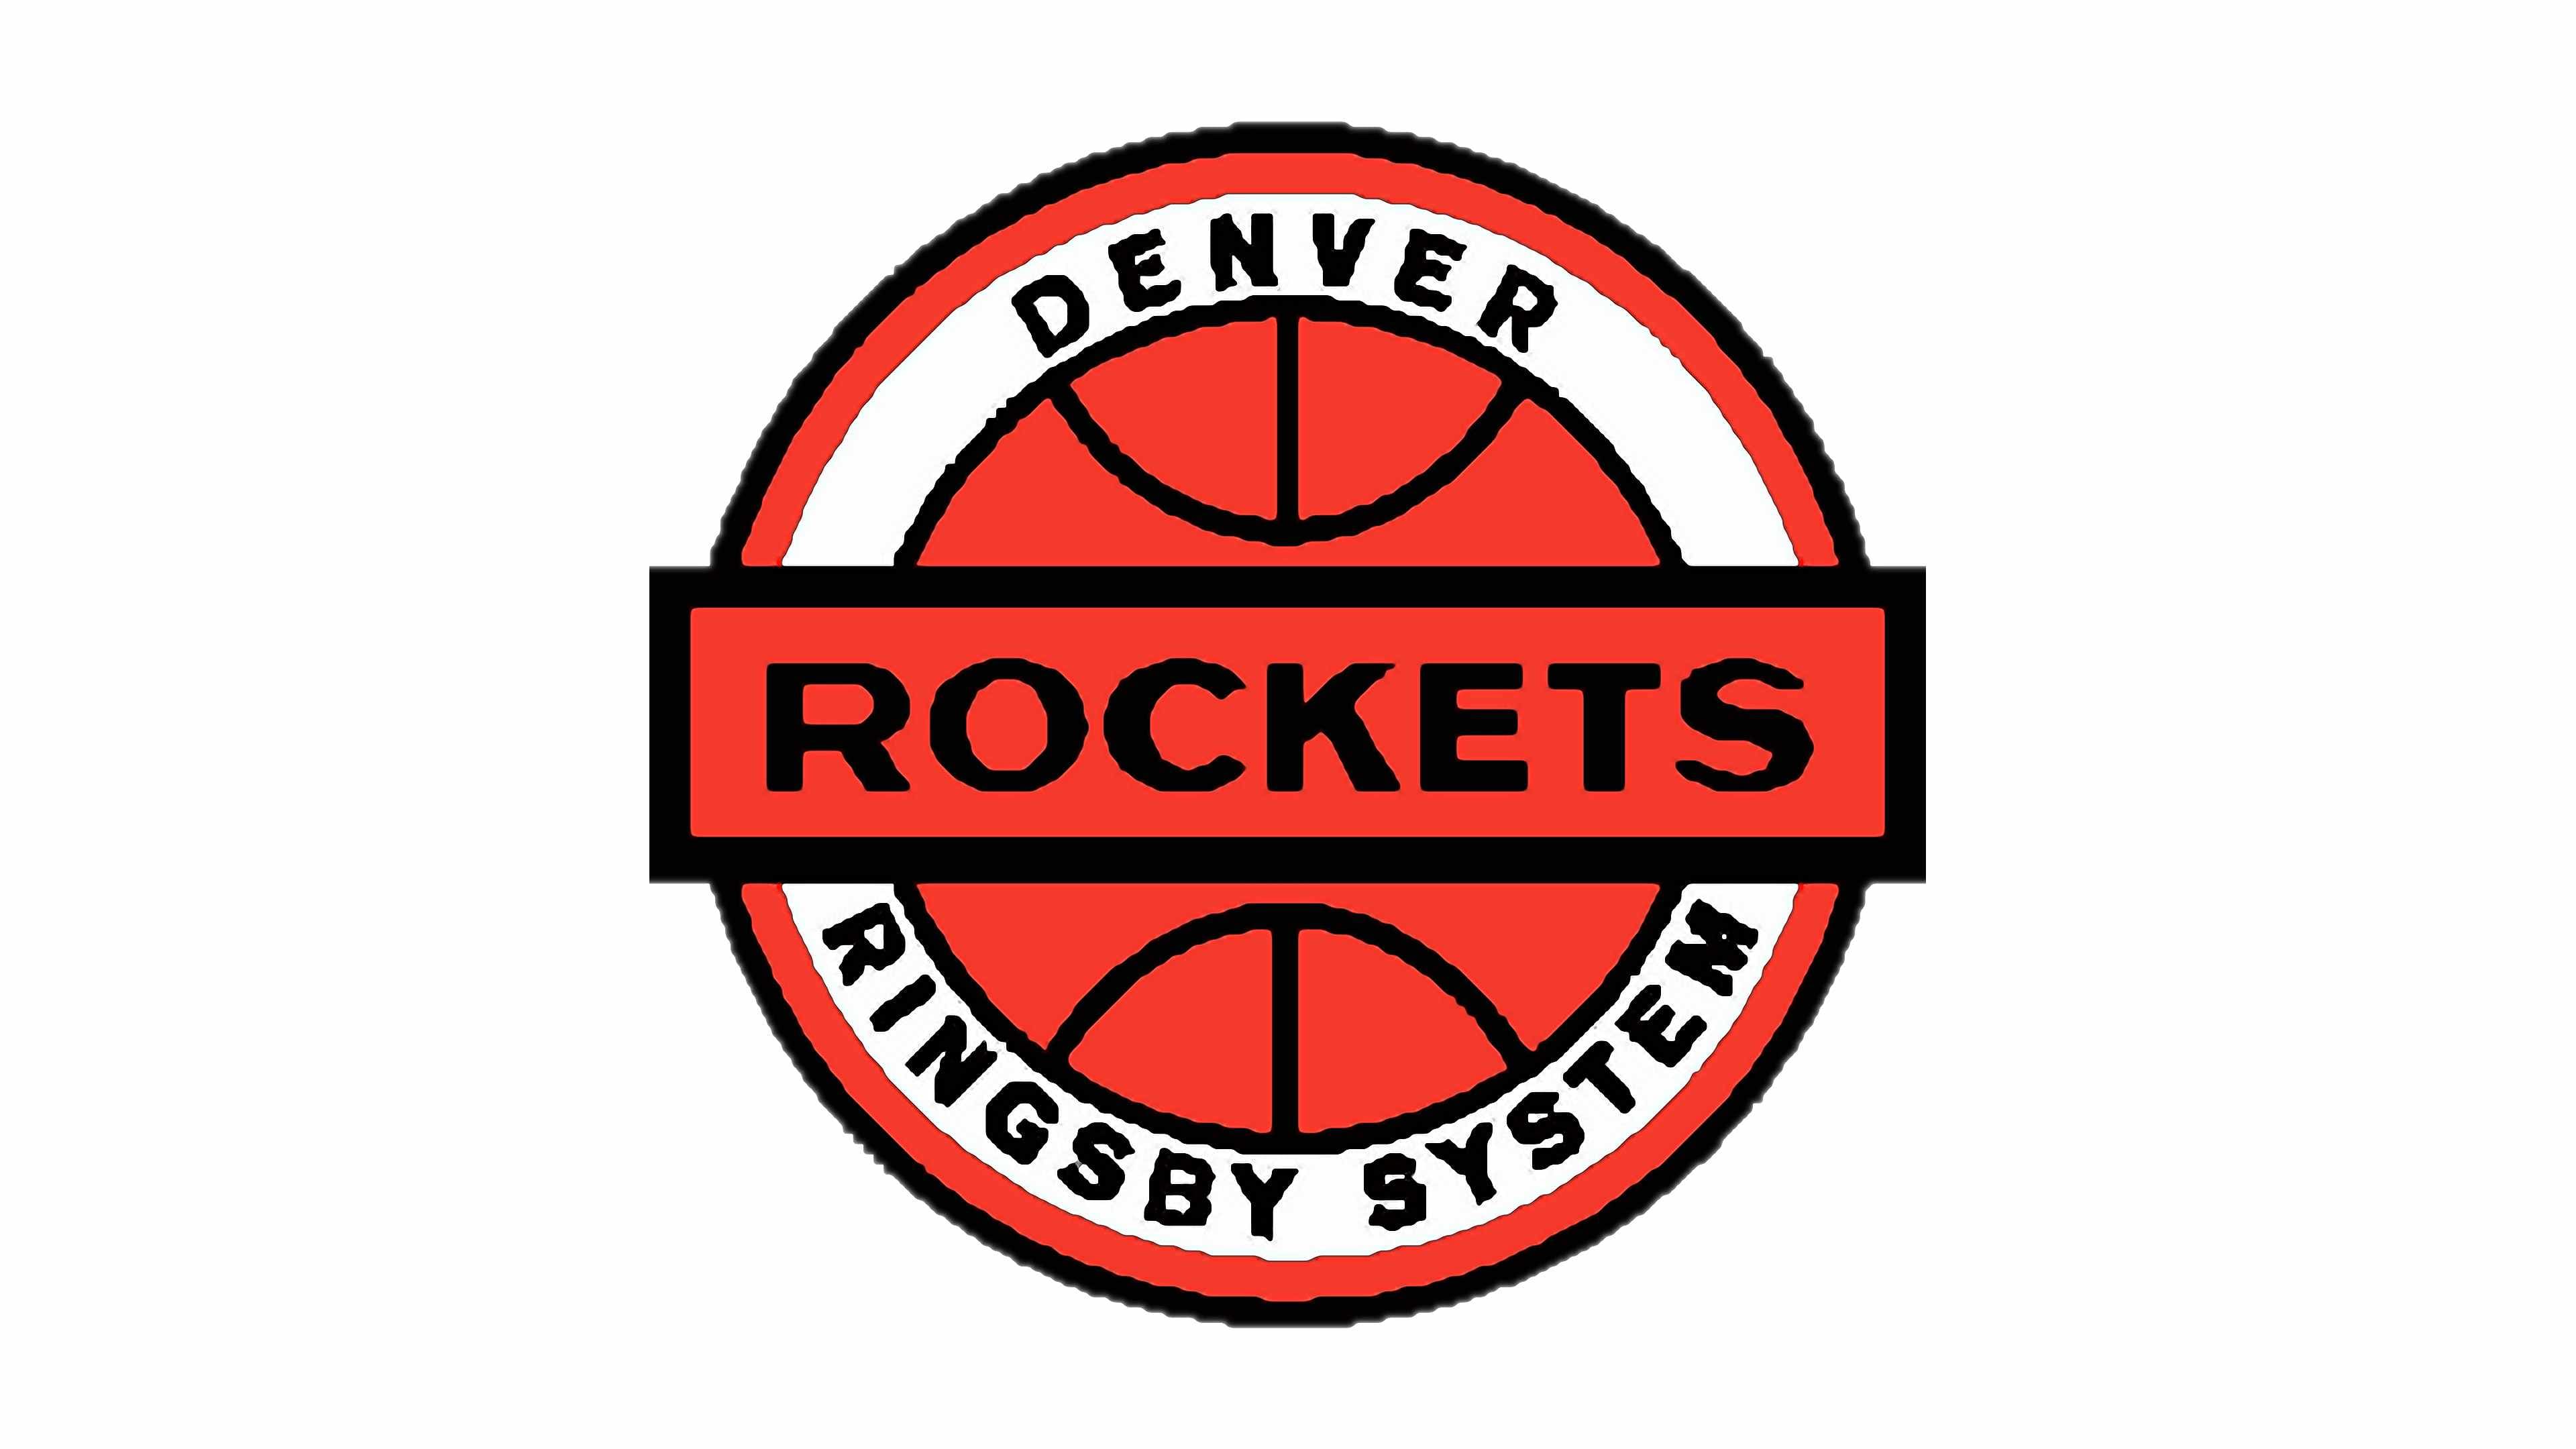 Houston Rockets - Wordmark Logo (2003) - Basketball Sports Vector